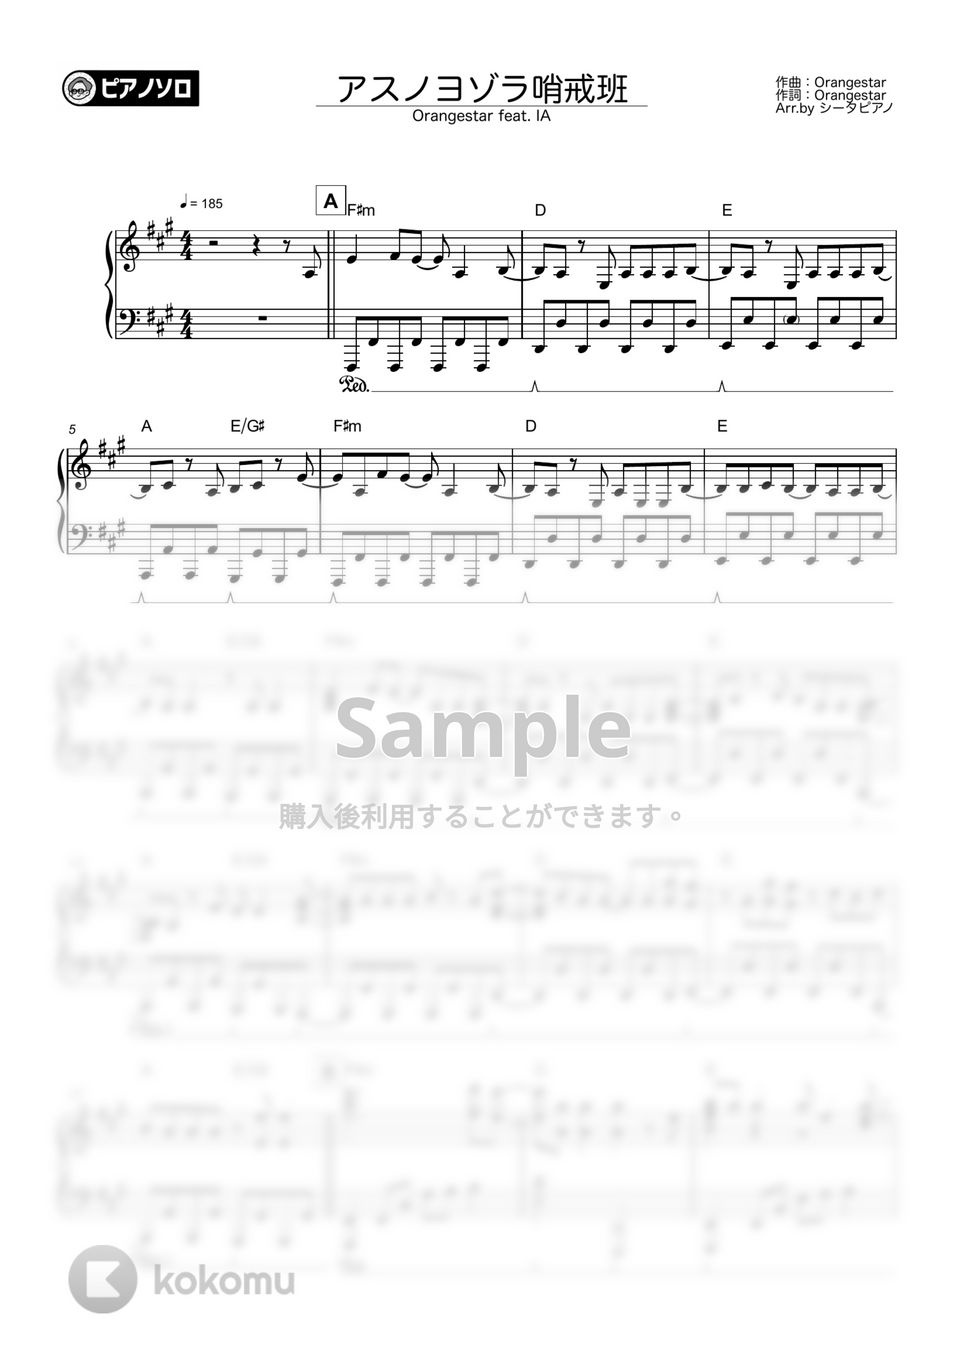 Orangestar(feat.IA) - アスノヨゾラ哨戒班 by シータピアノ